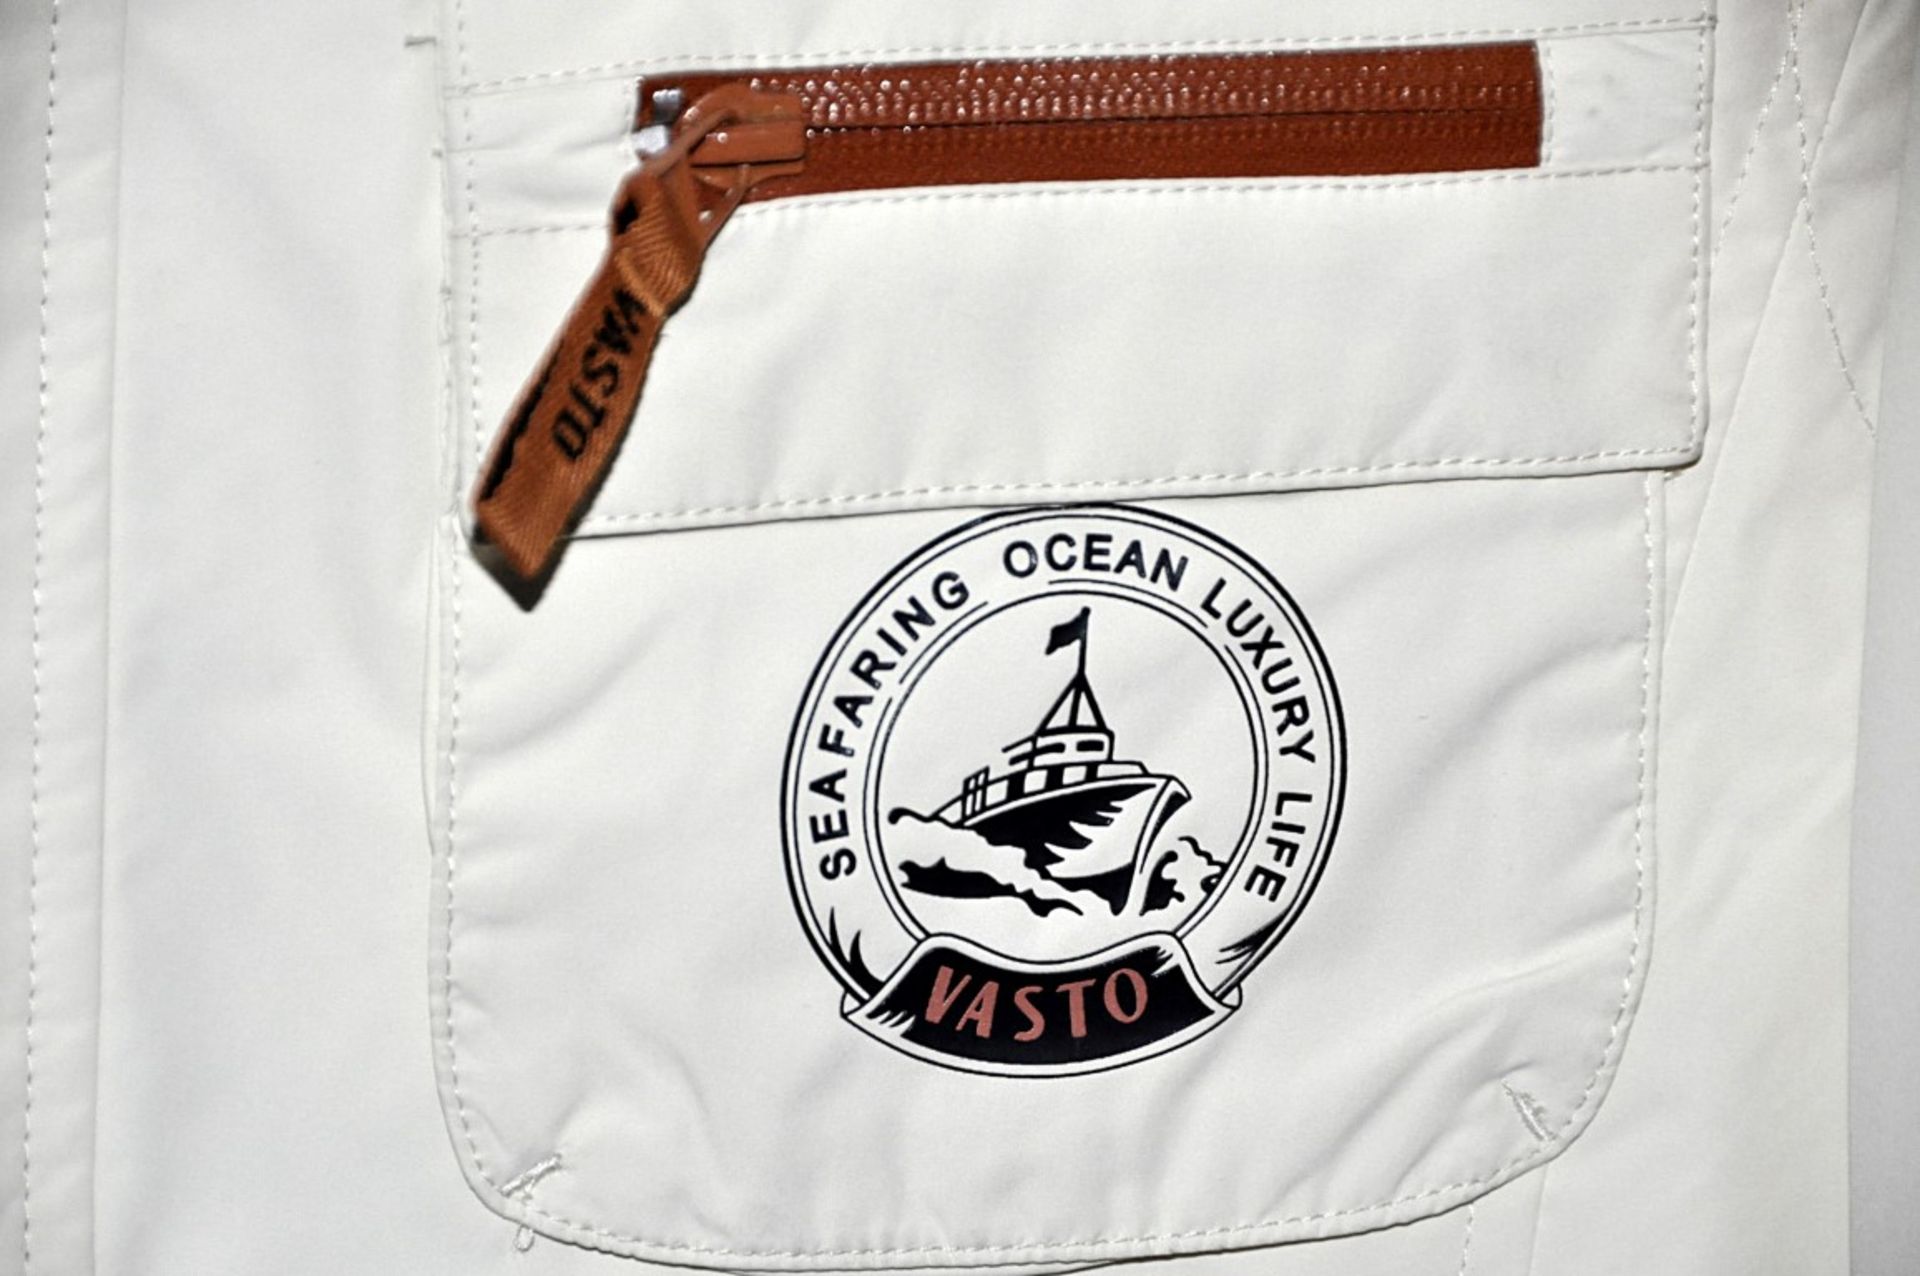 1 x Men's Hooded Seafaring Jacket By International Luxury Brand "Vasto" (SAZ7231/411) – Size: - Image 3 of 9